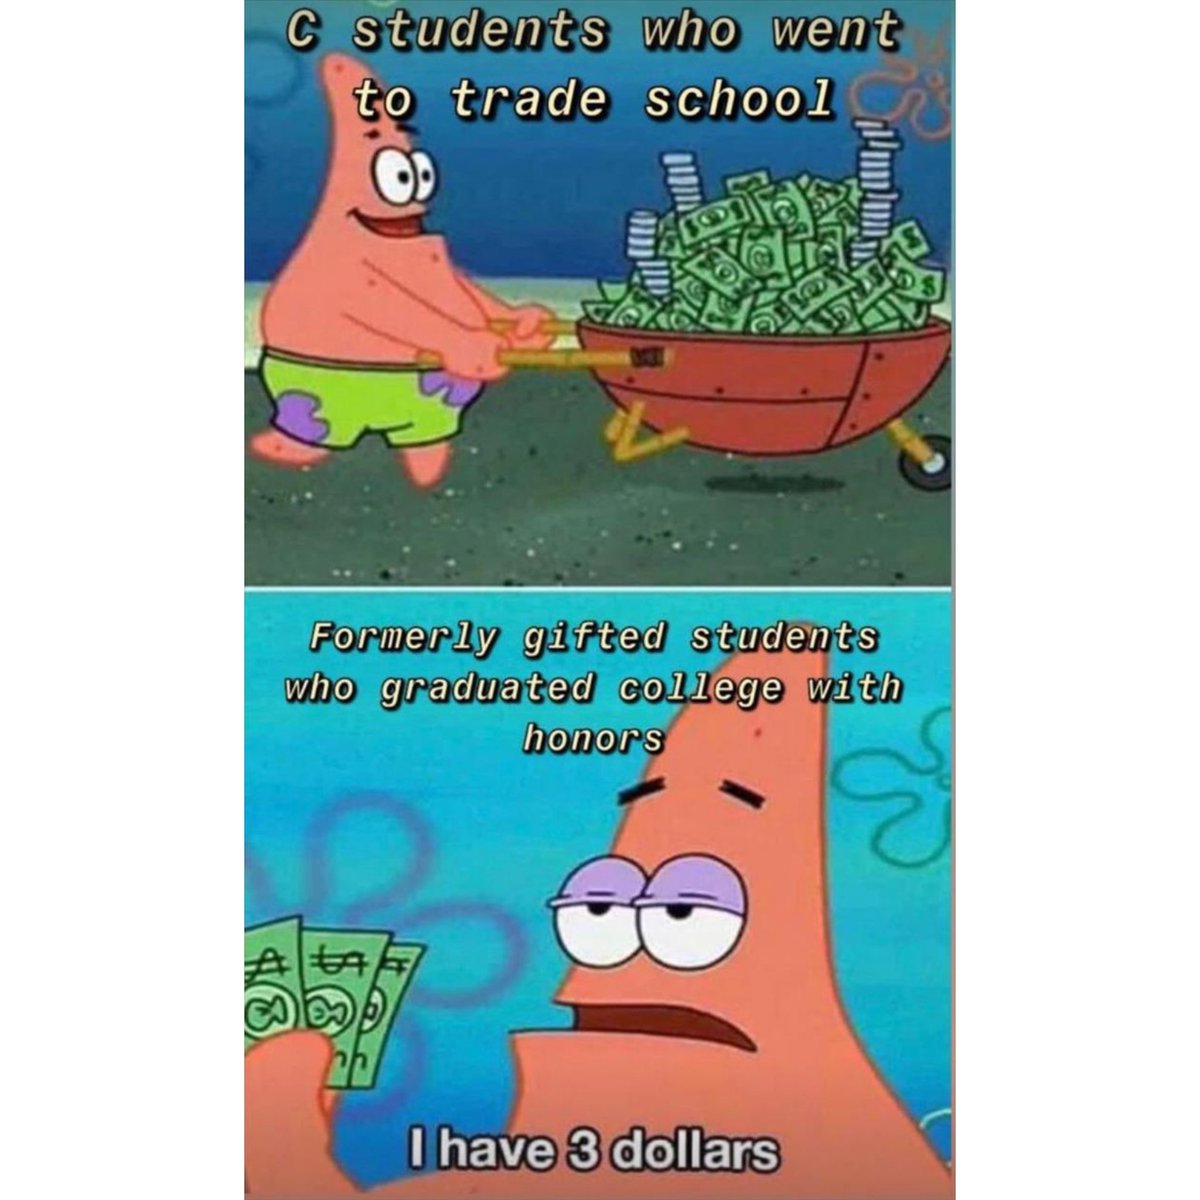 #tradeschool #tradeschools #college #collegegraduate #collegegraduates #collegegrads #collegegrad #broke #meme #memes